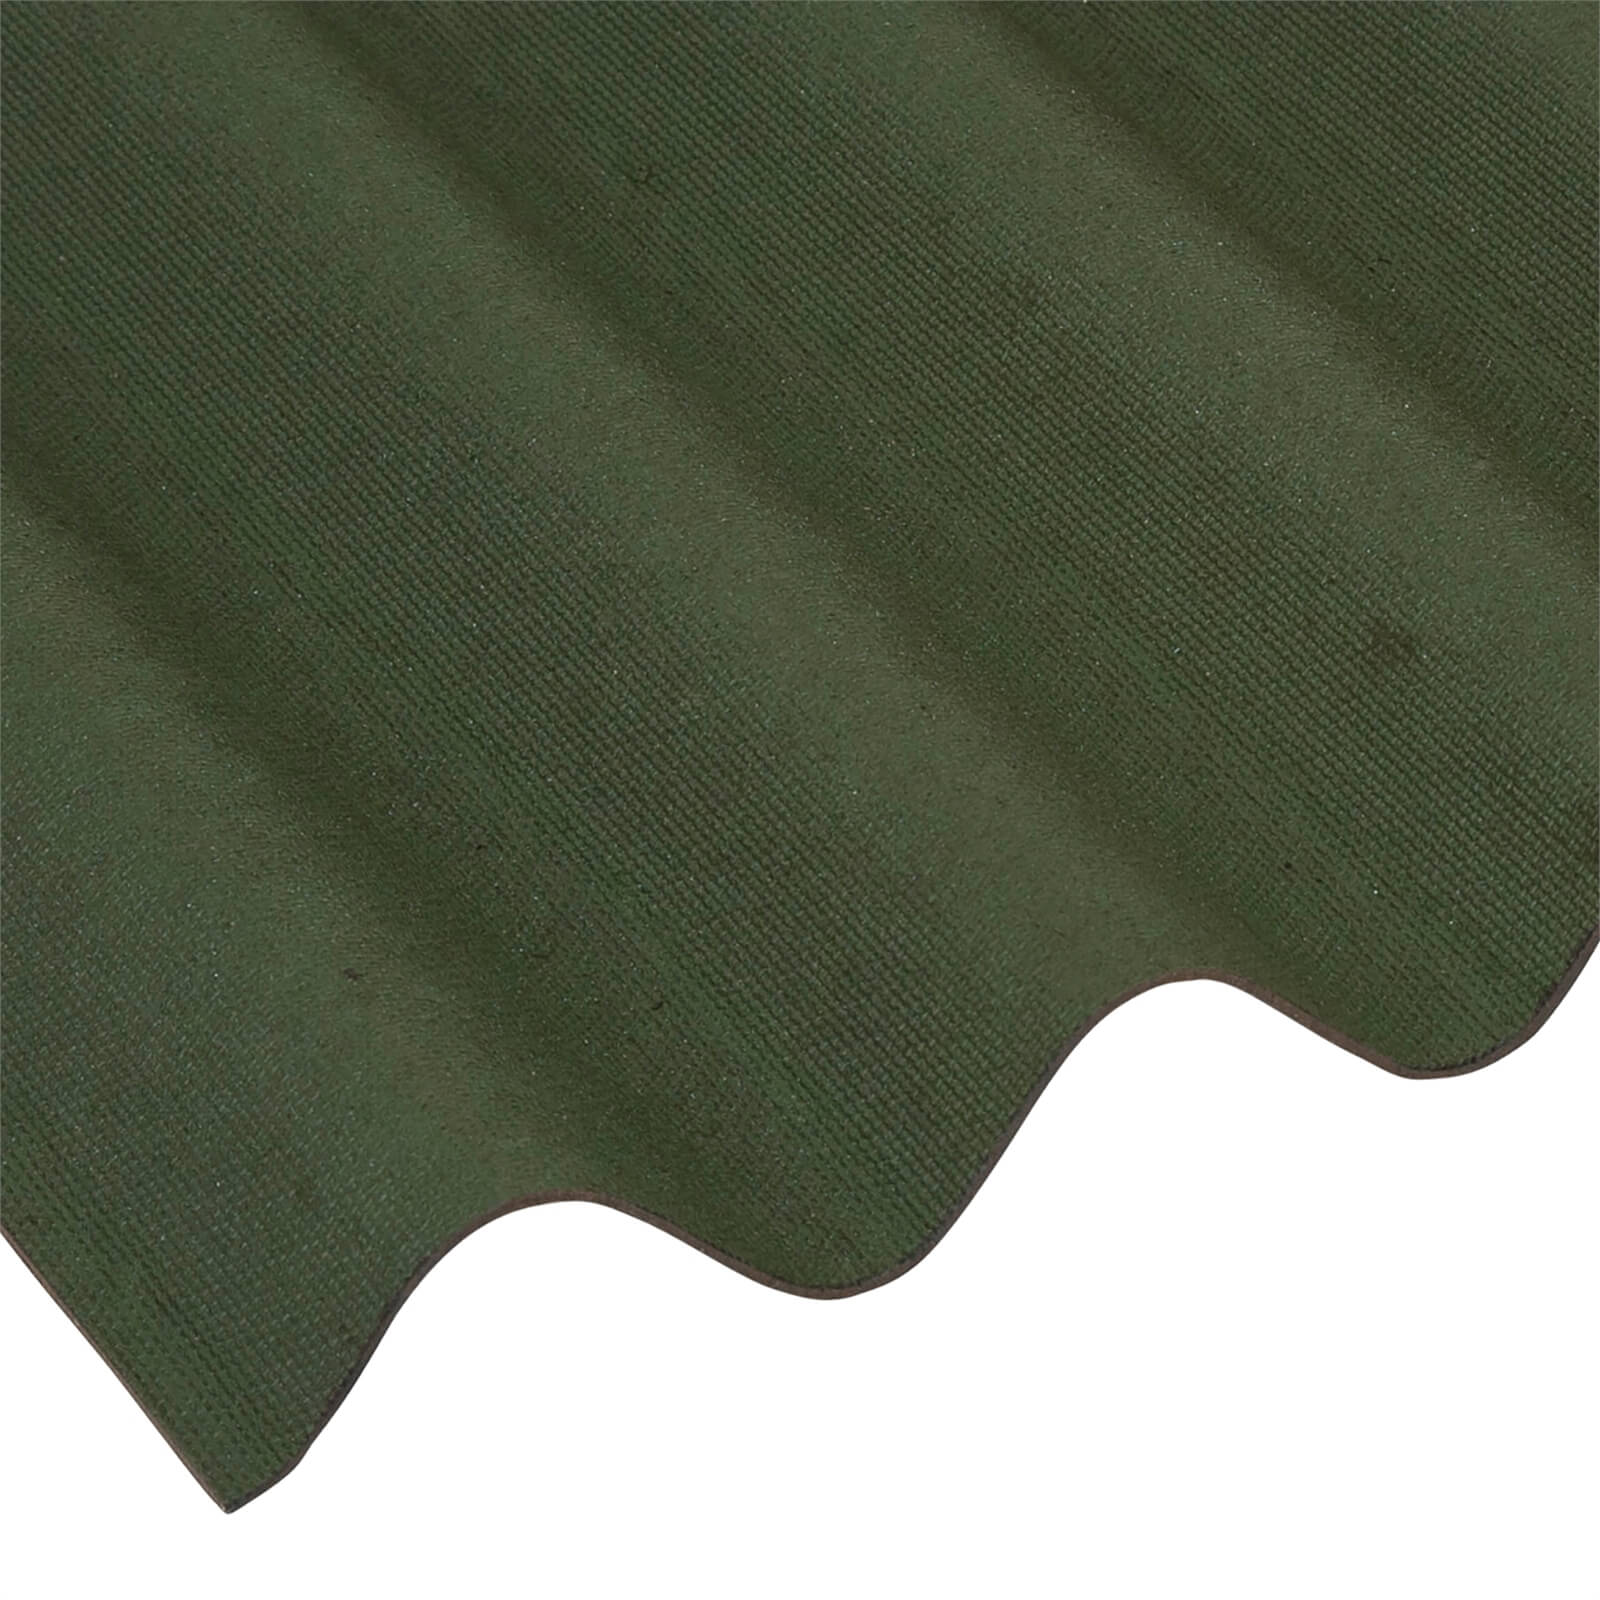 Coroline Green Sheet 2m - 3 Pack